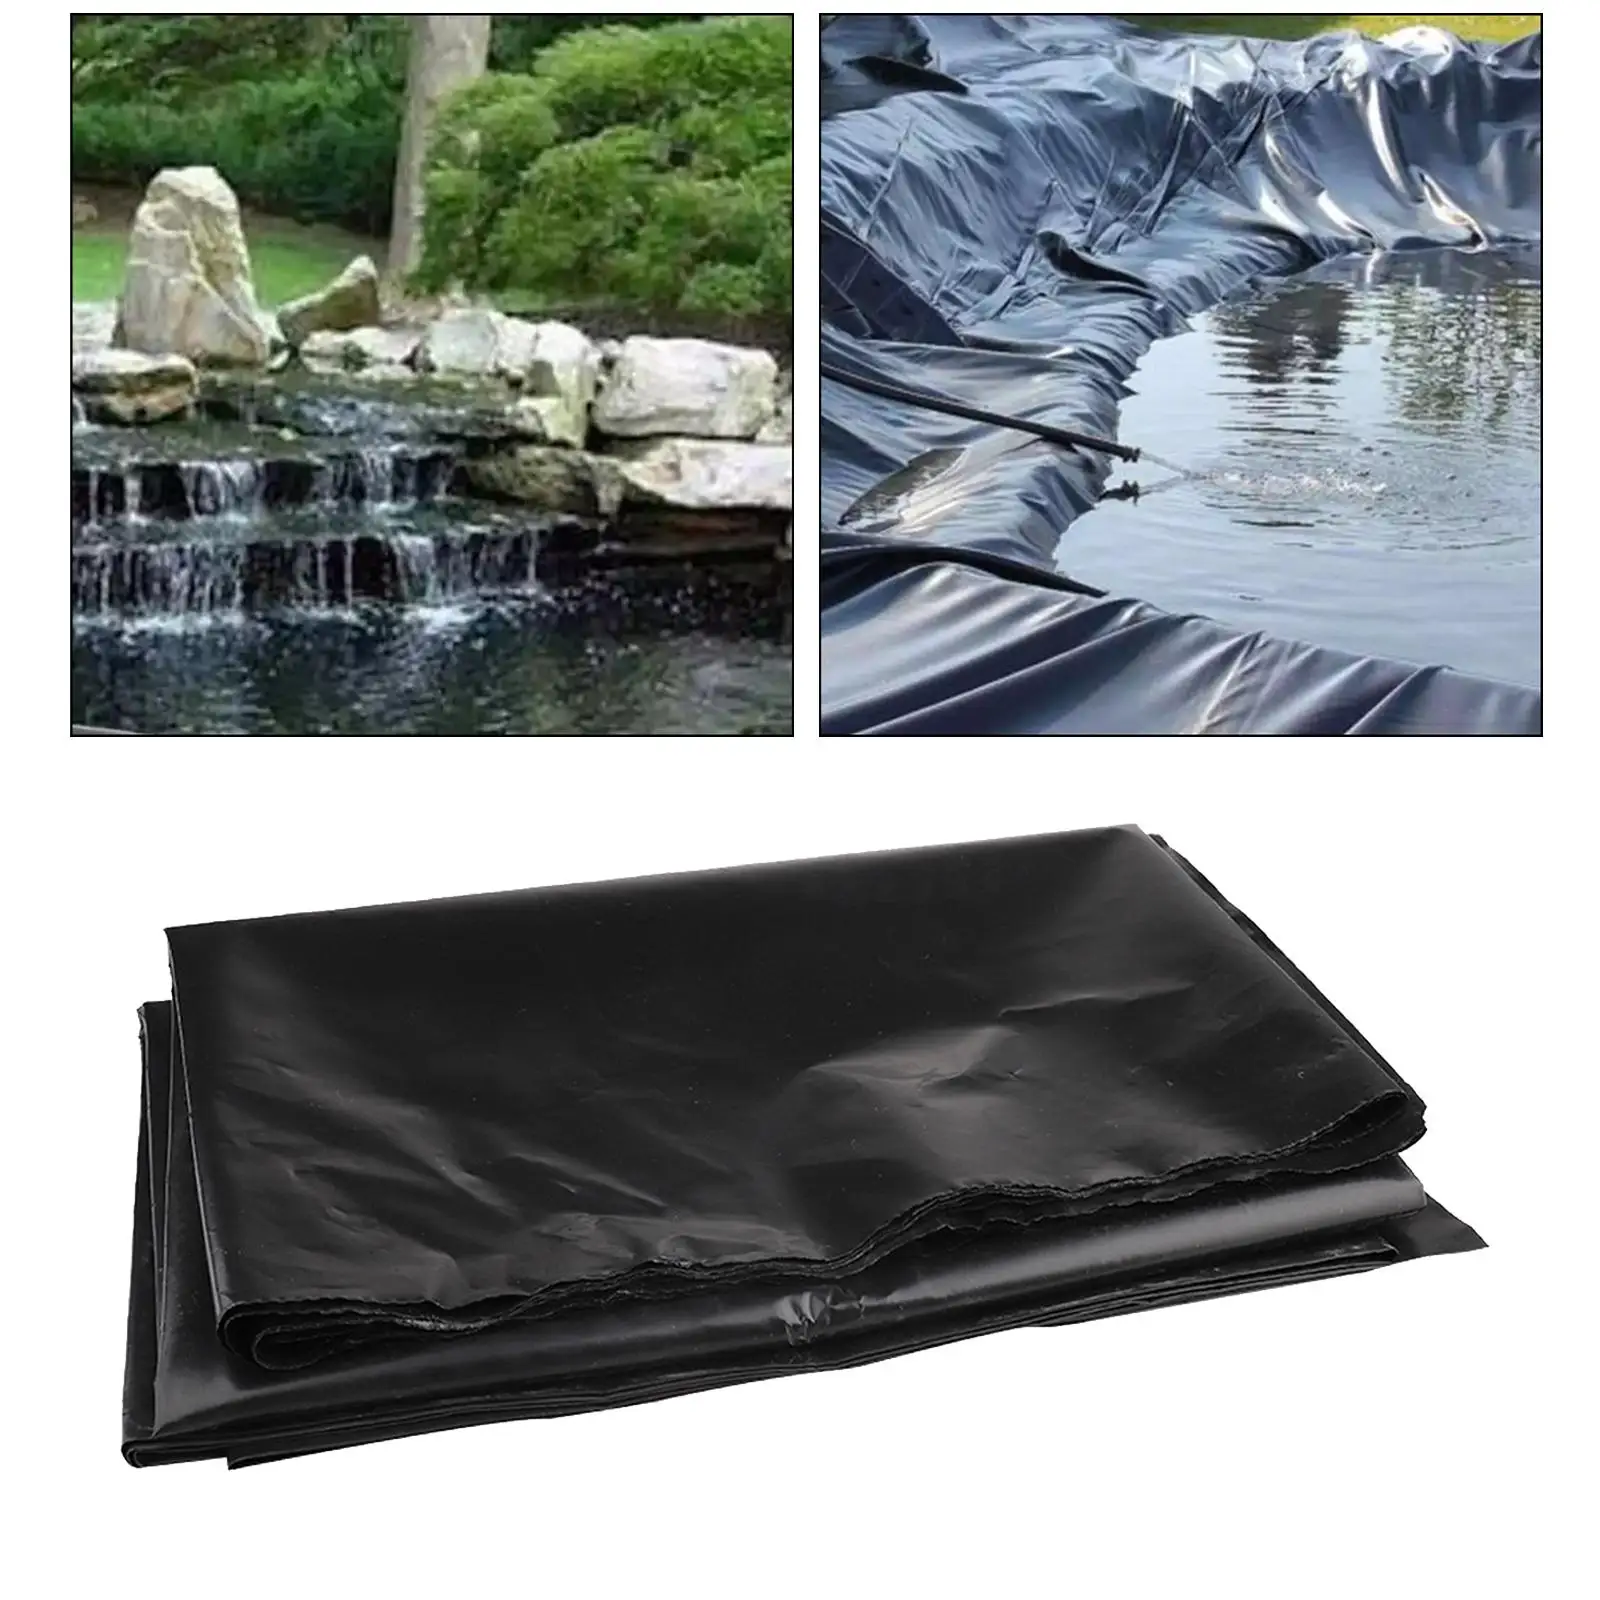 Impermeable Film Tear-Resistant Waterproof for Fish Pond Black